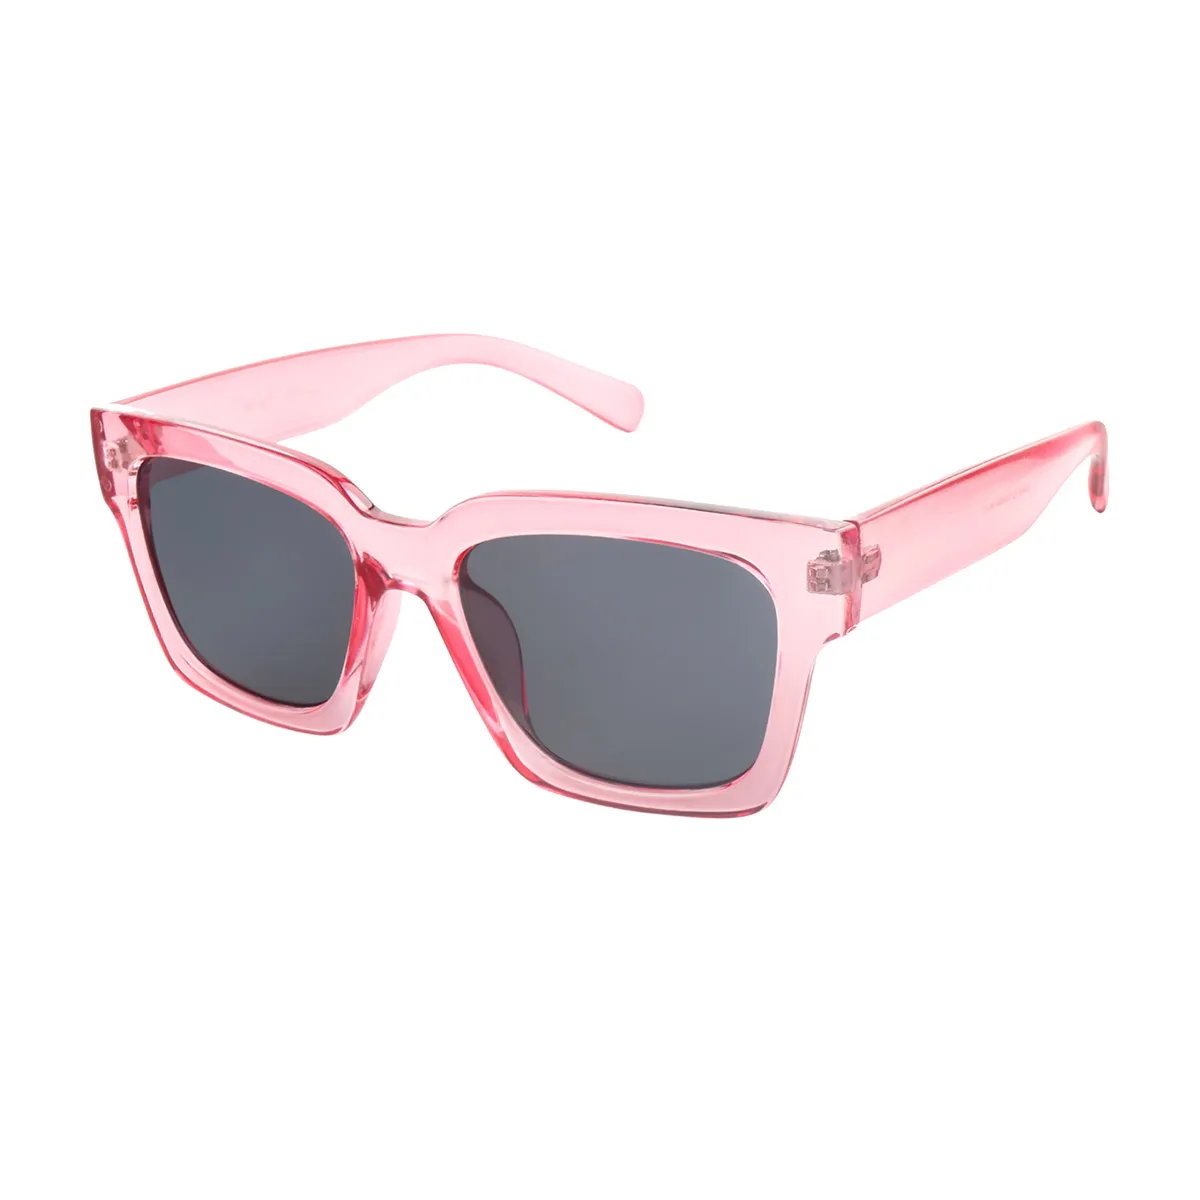 Jordi - Square Transparent-Pink Sunglasses for Women